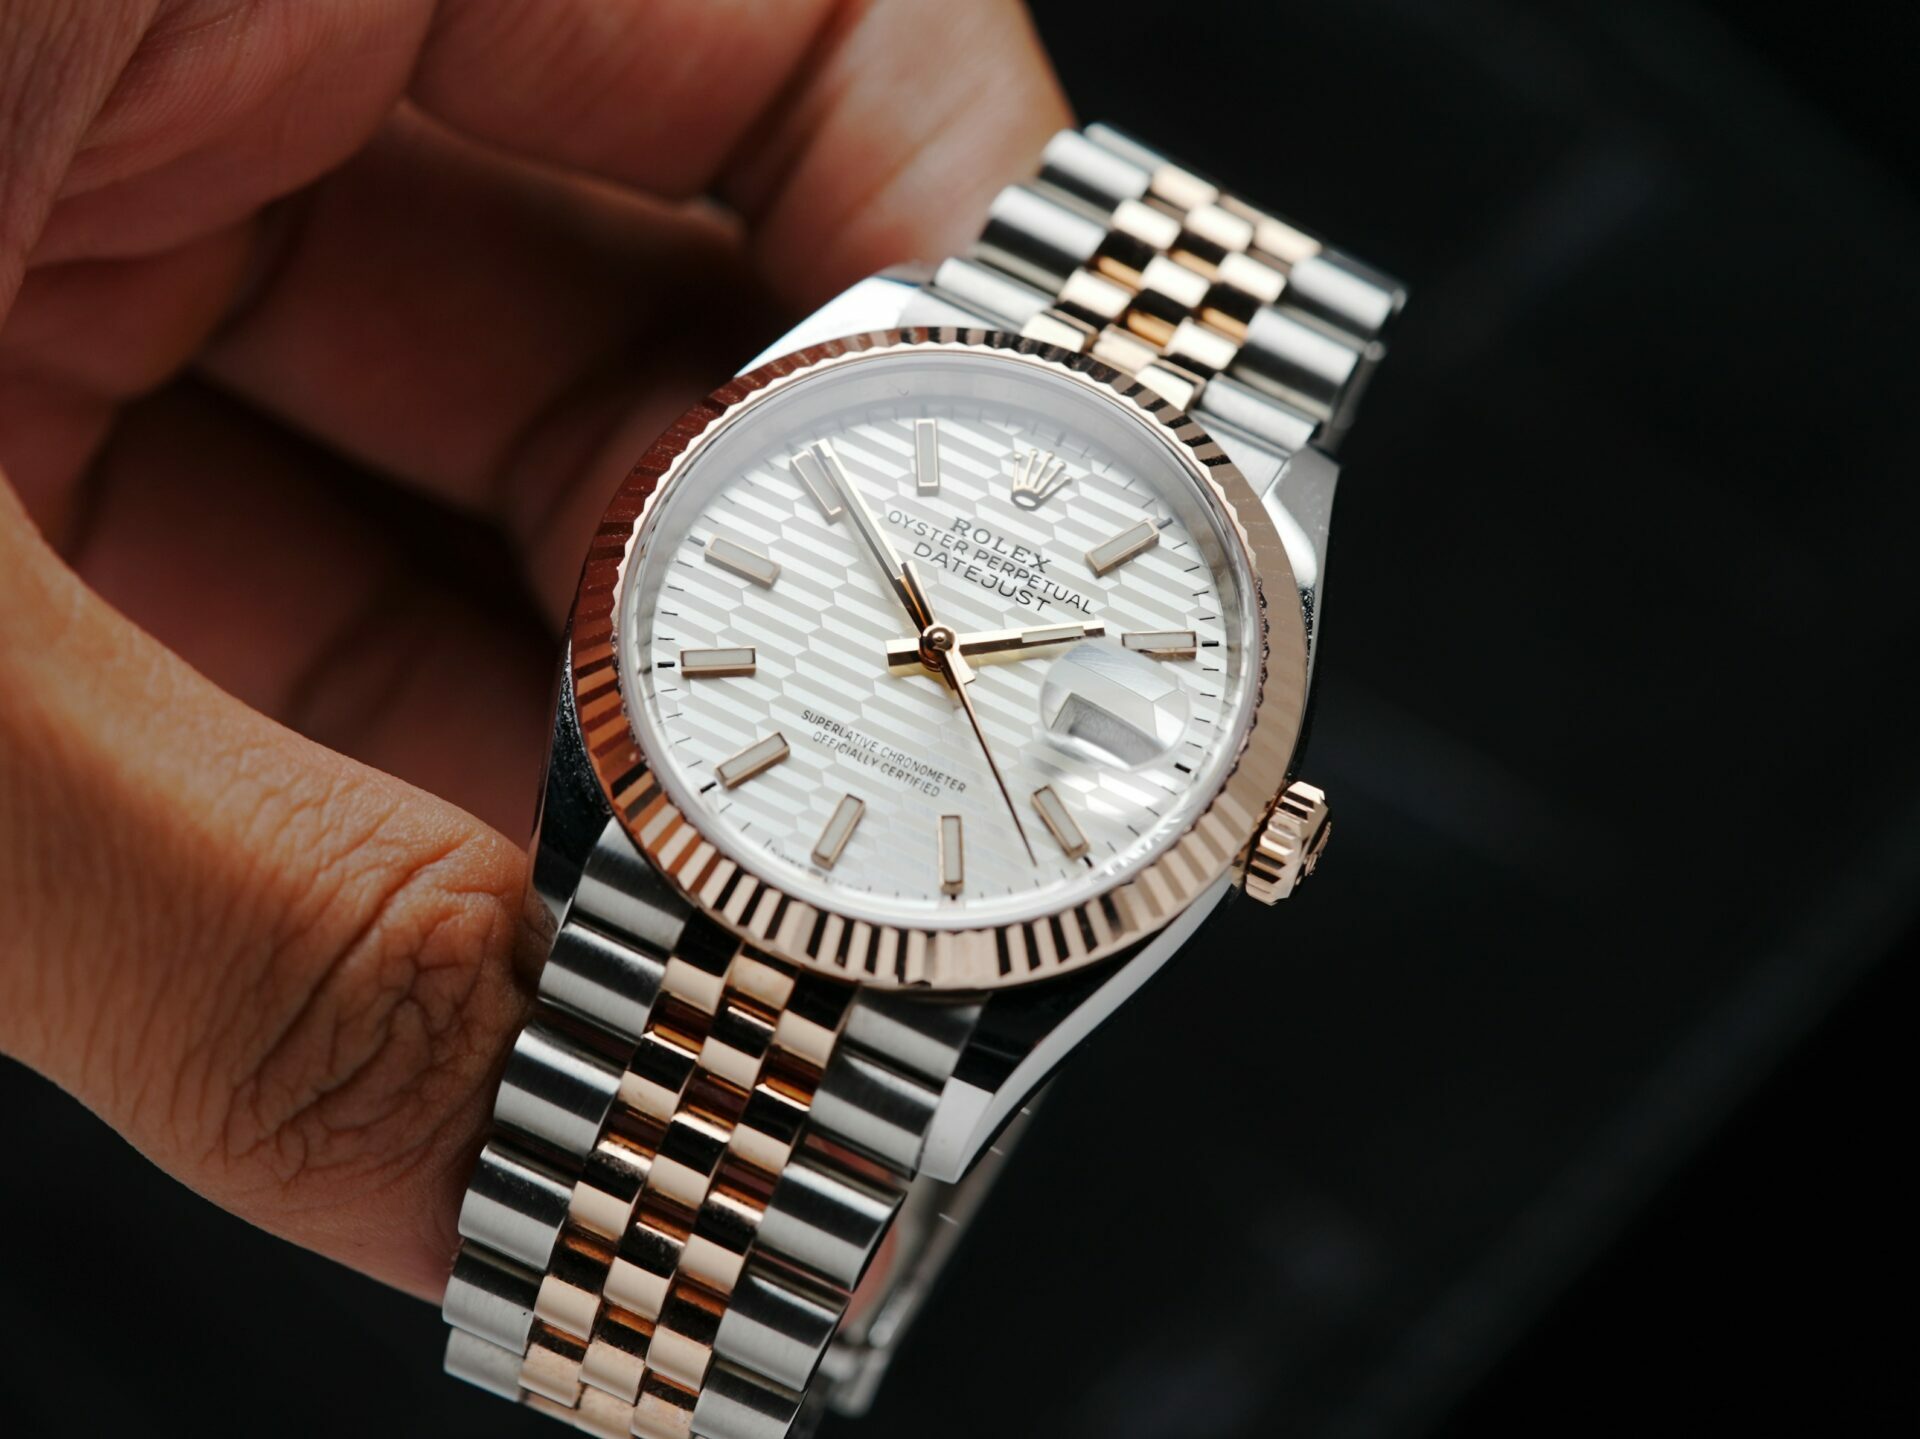 Rolex Datejust 36 Motif Rose Gold 2022 watch being held in hand.